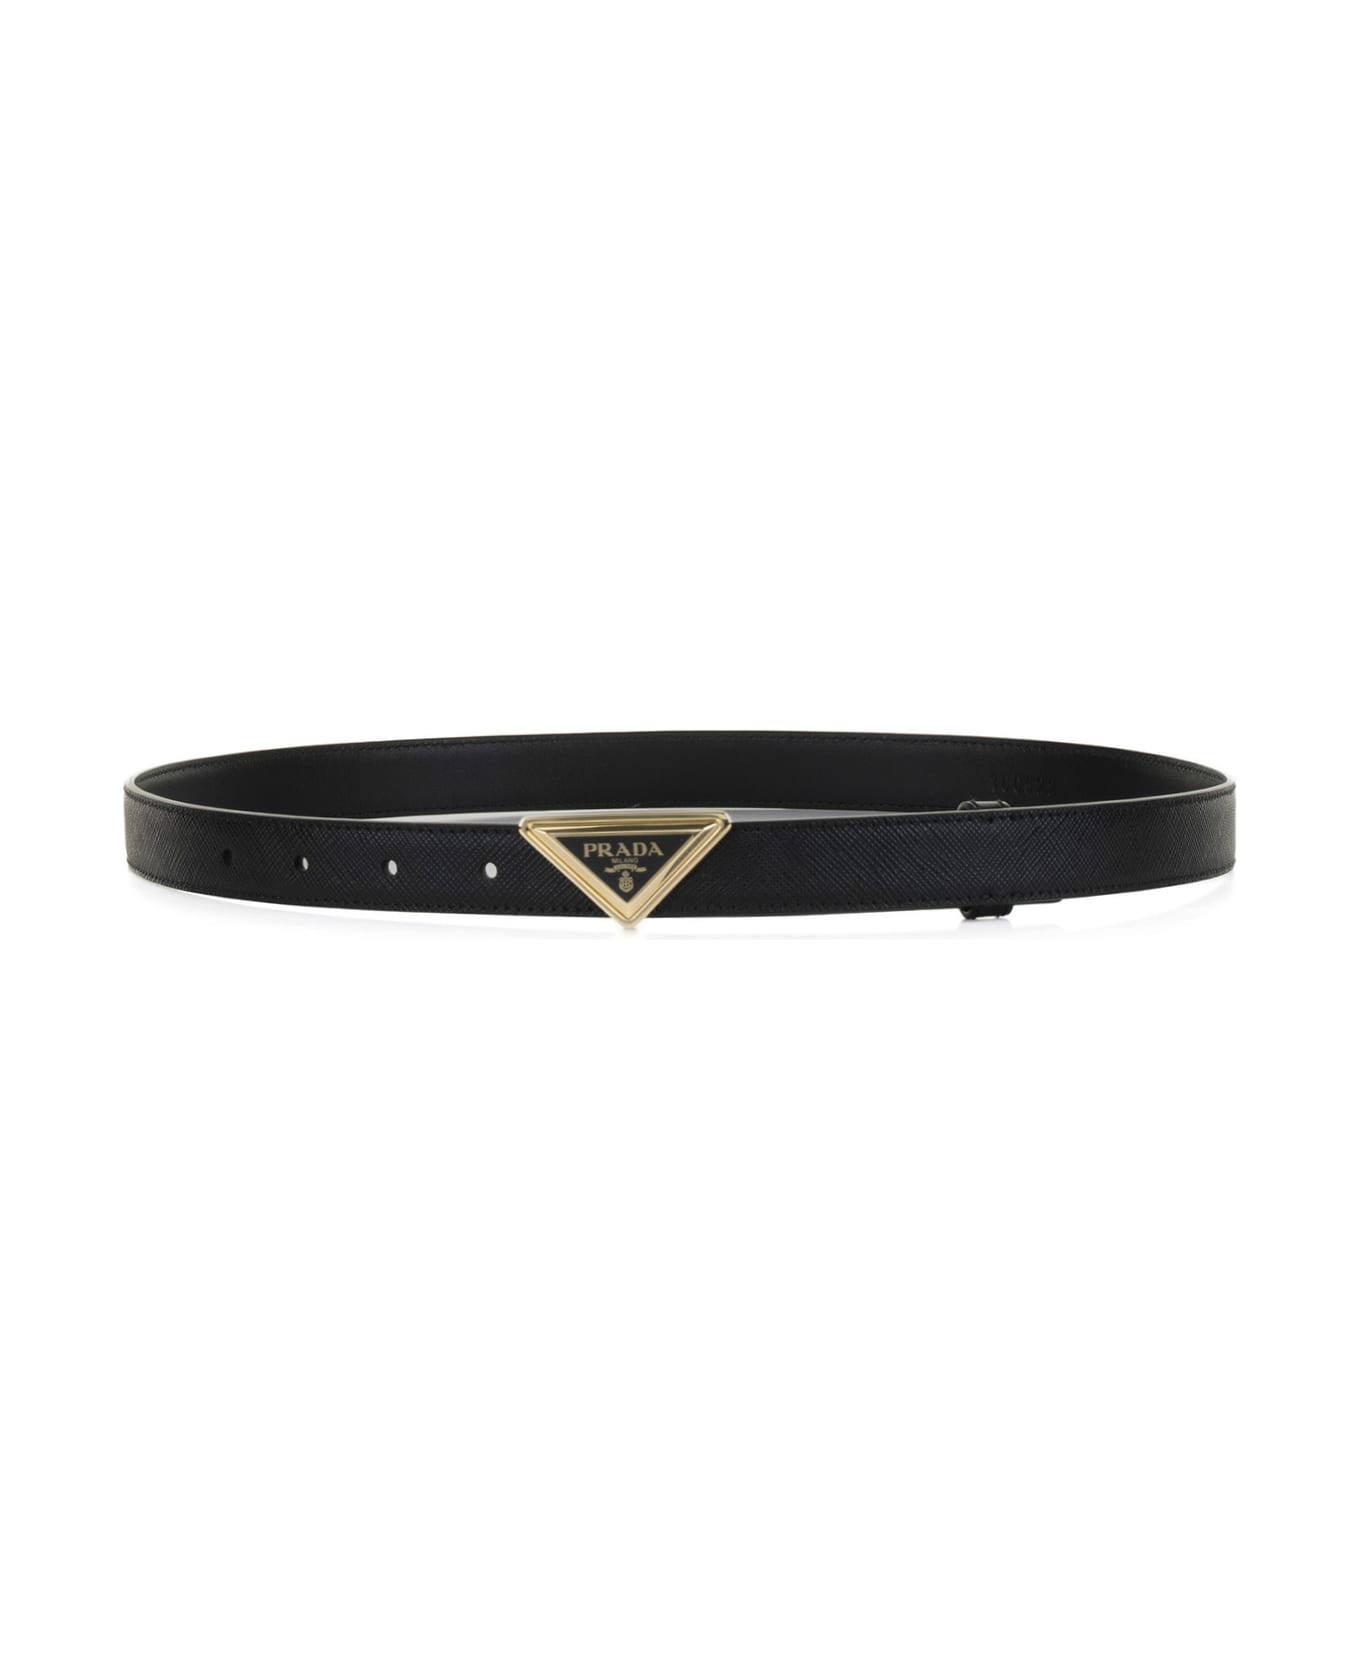 Prada Belt With Triangle Logo - NERO